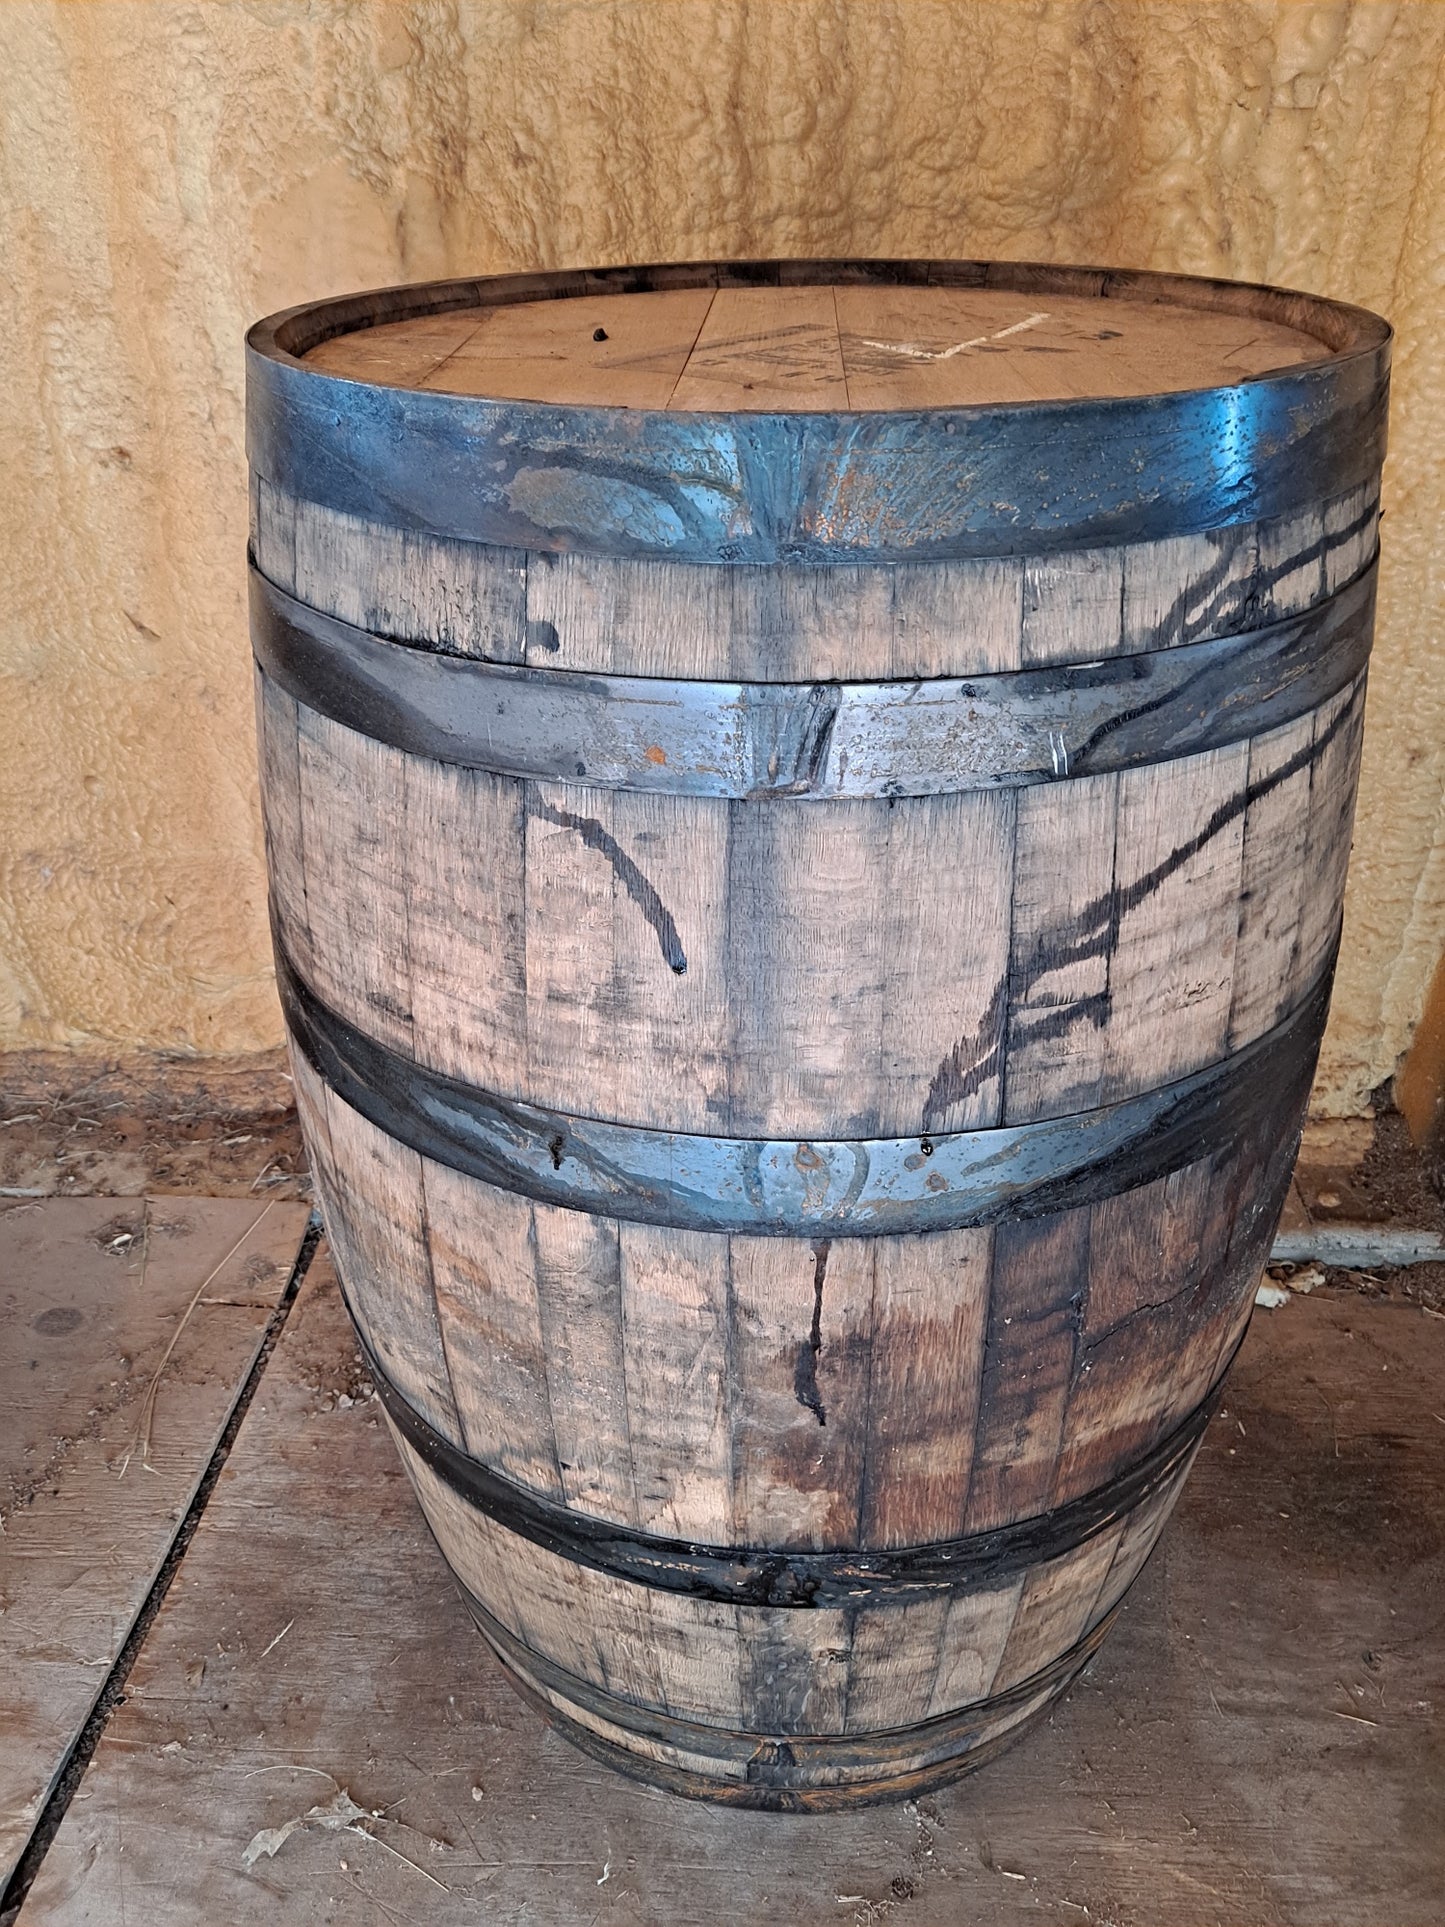 Whiskey barrel 53-gallon